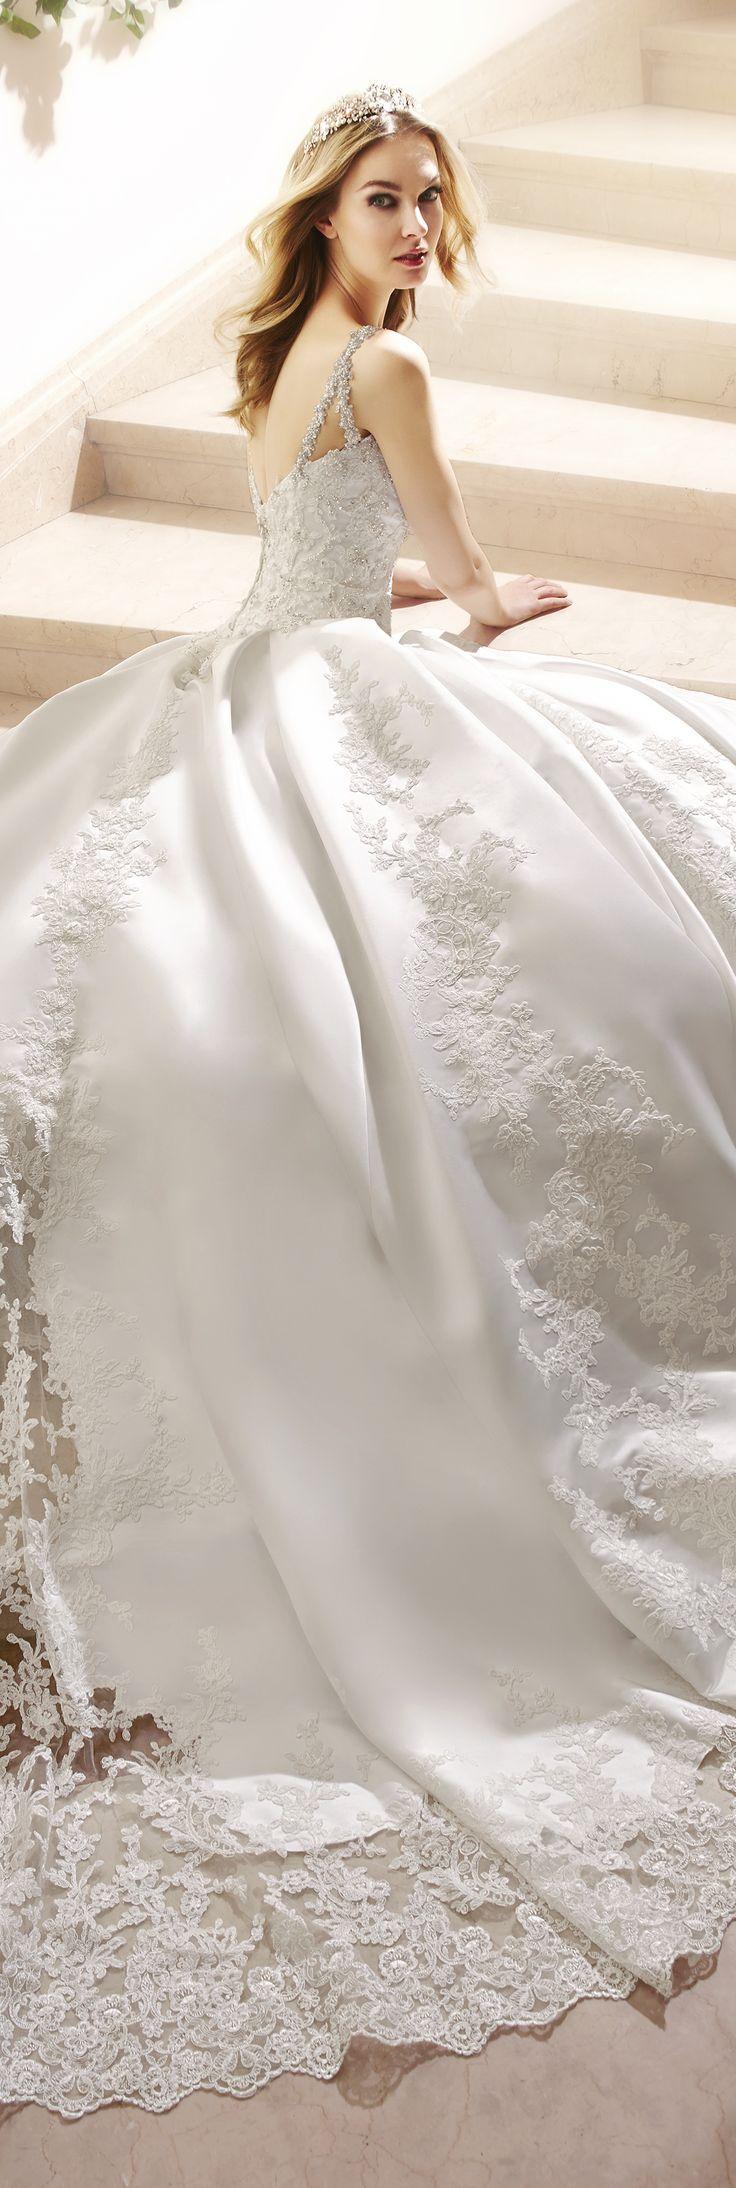 زفاف - Princess Satin Lace Ball Gown Wedding Dress 